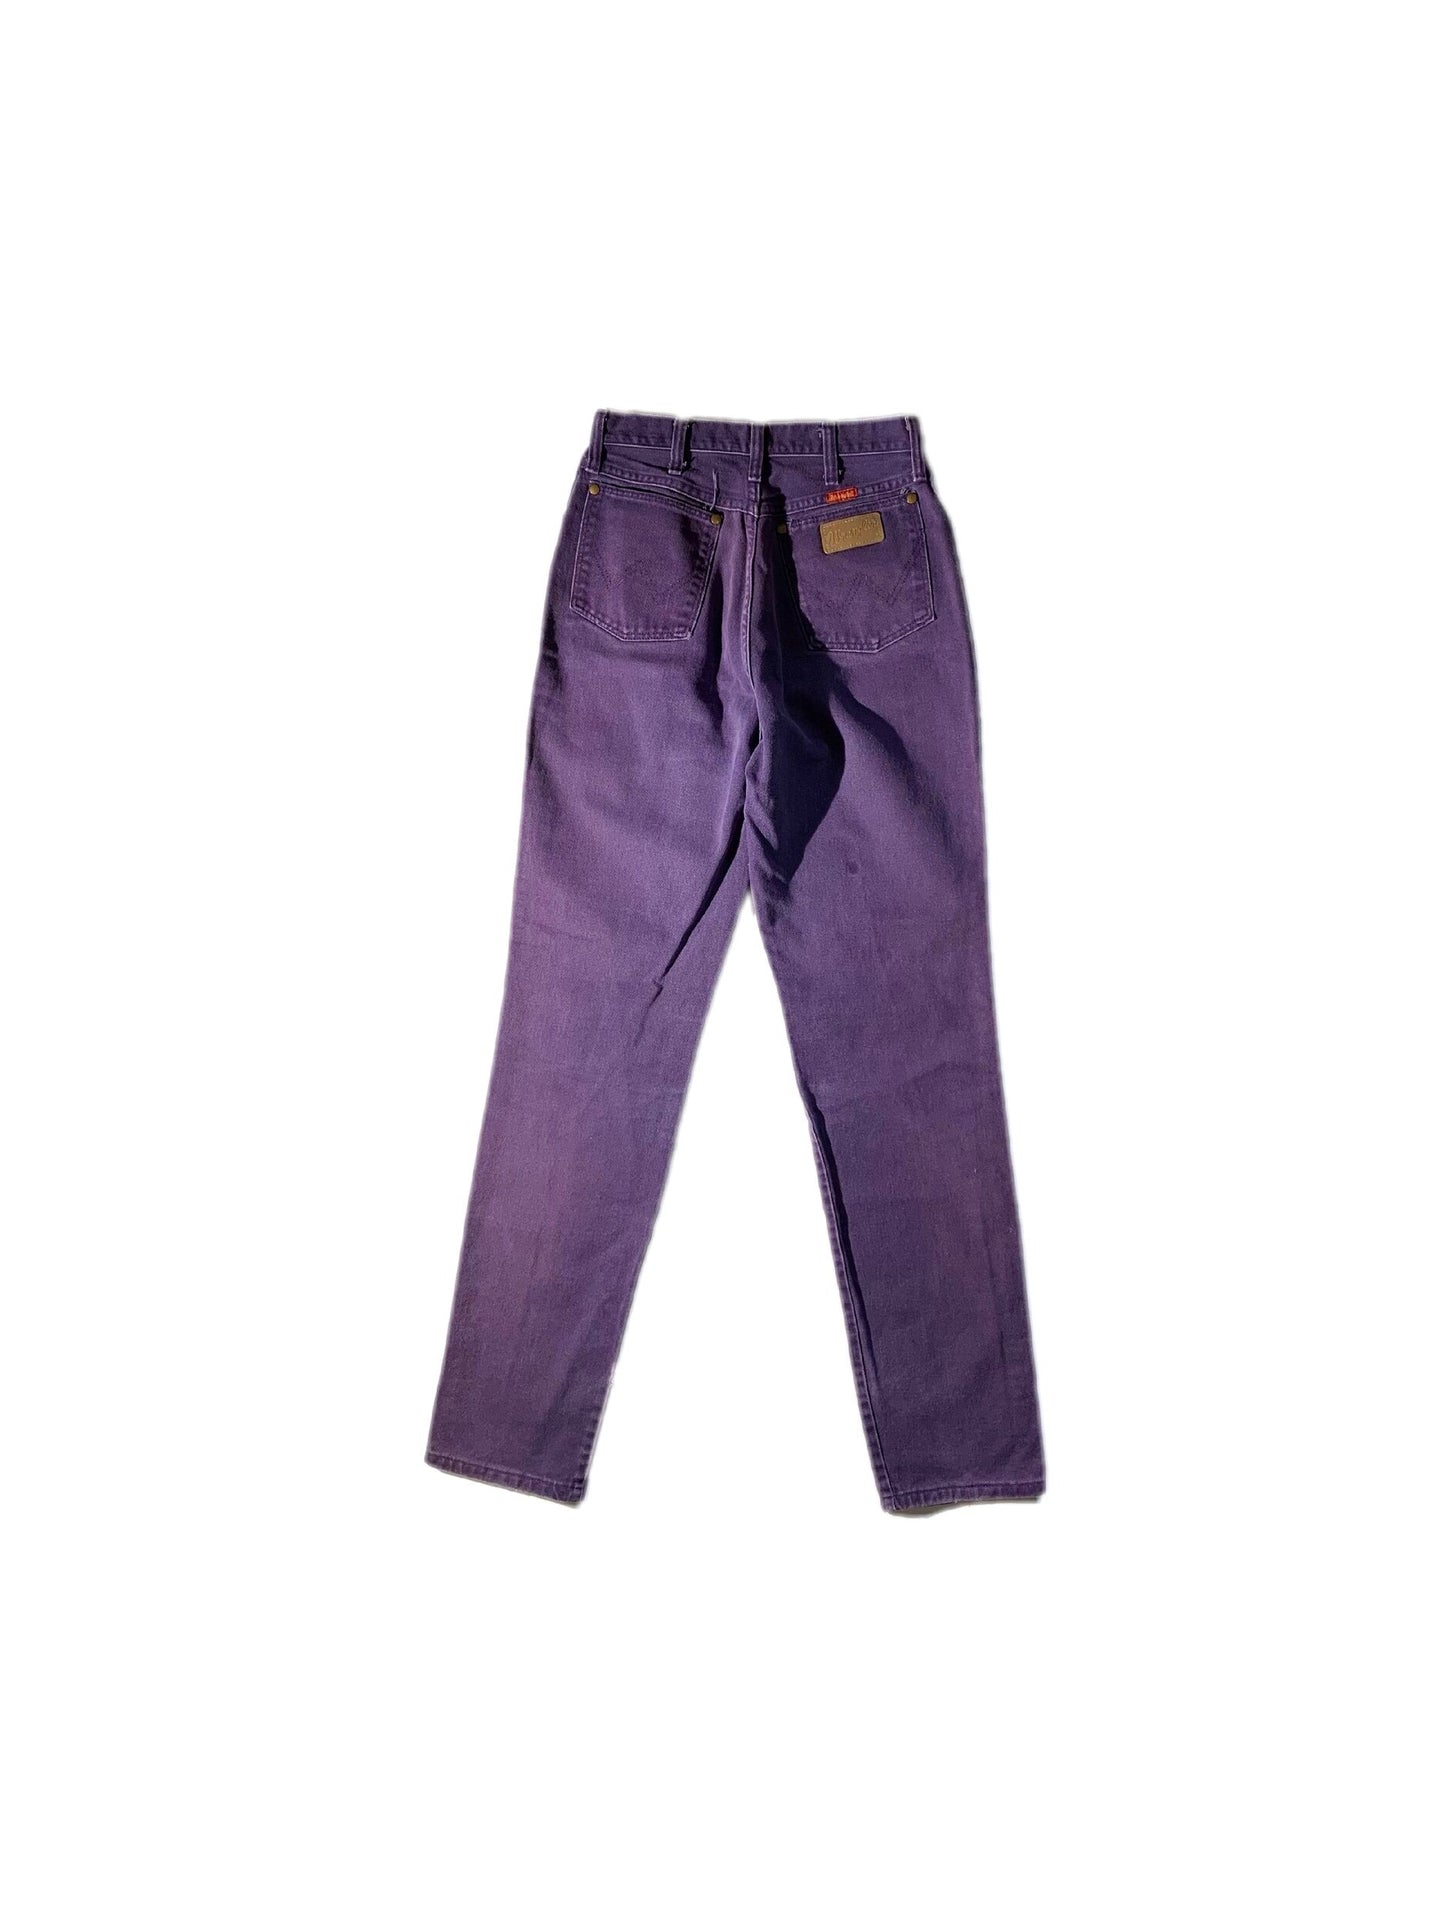 Vintage Purple Wrangler Jeans